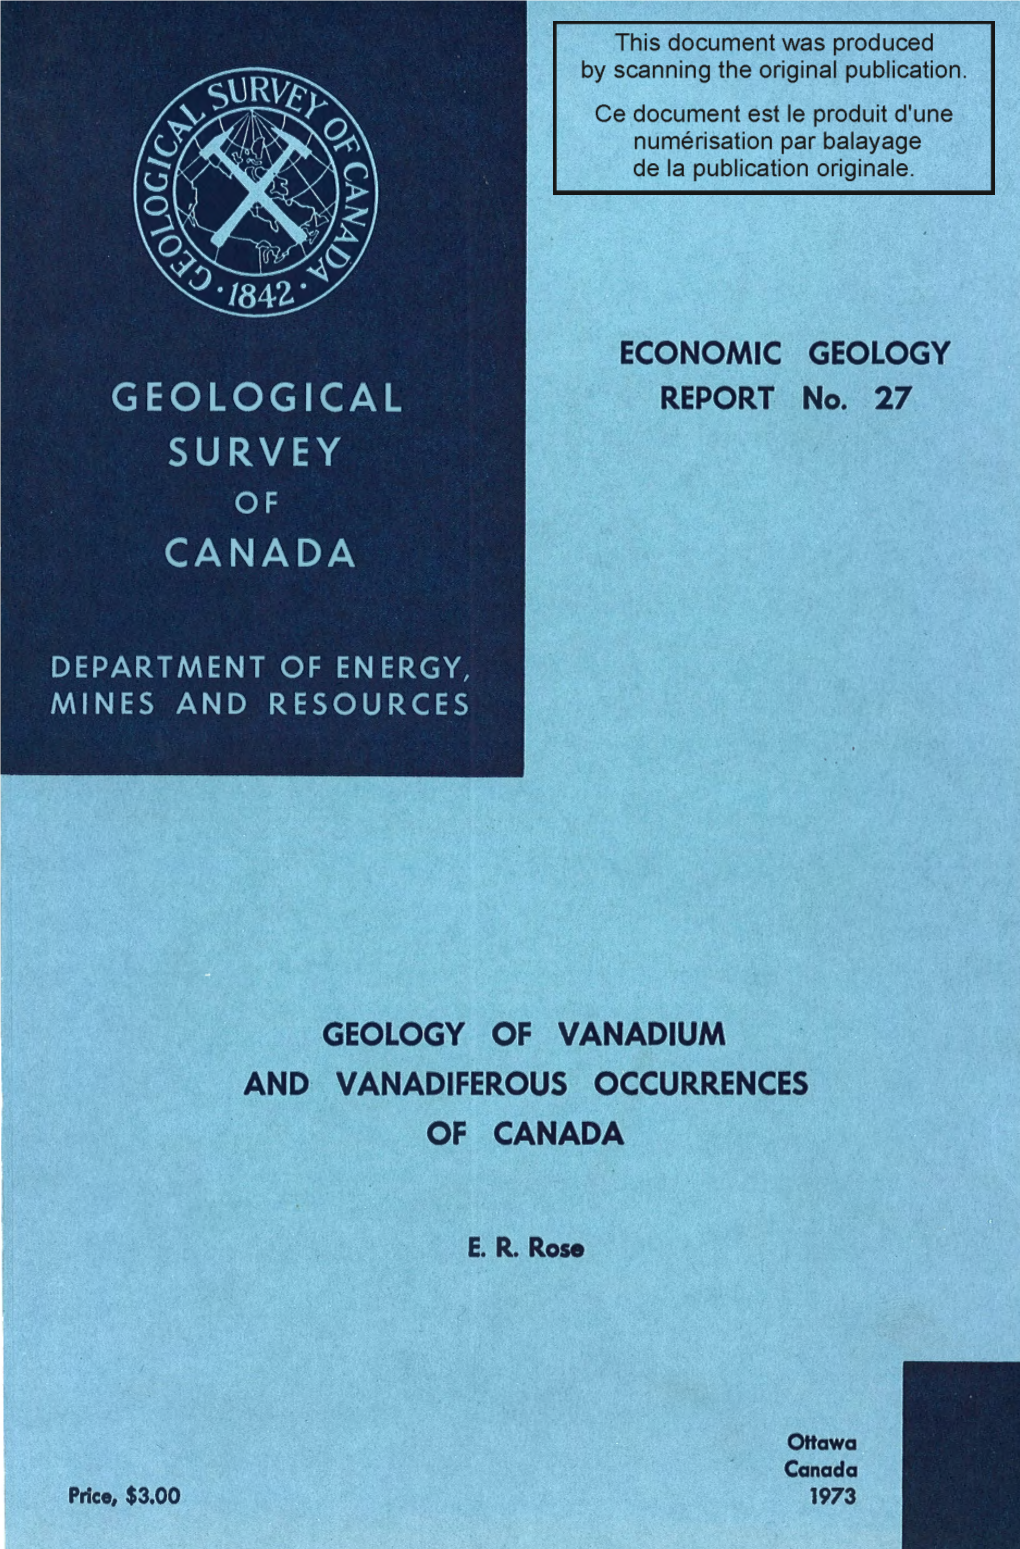 ECONOMIC GEOLOGY REPORT No. 27 GEOLOGY of VANADIUM AND